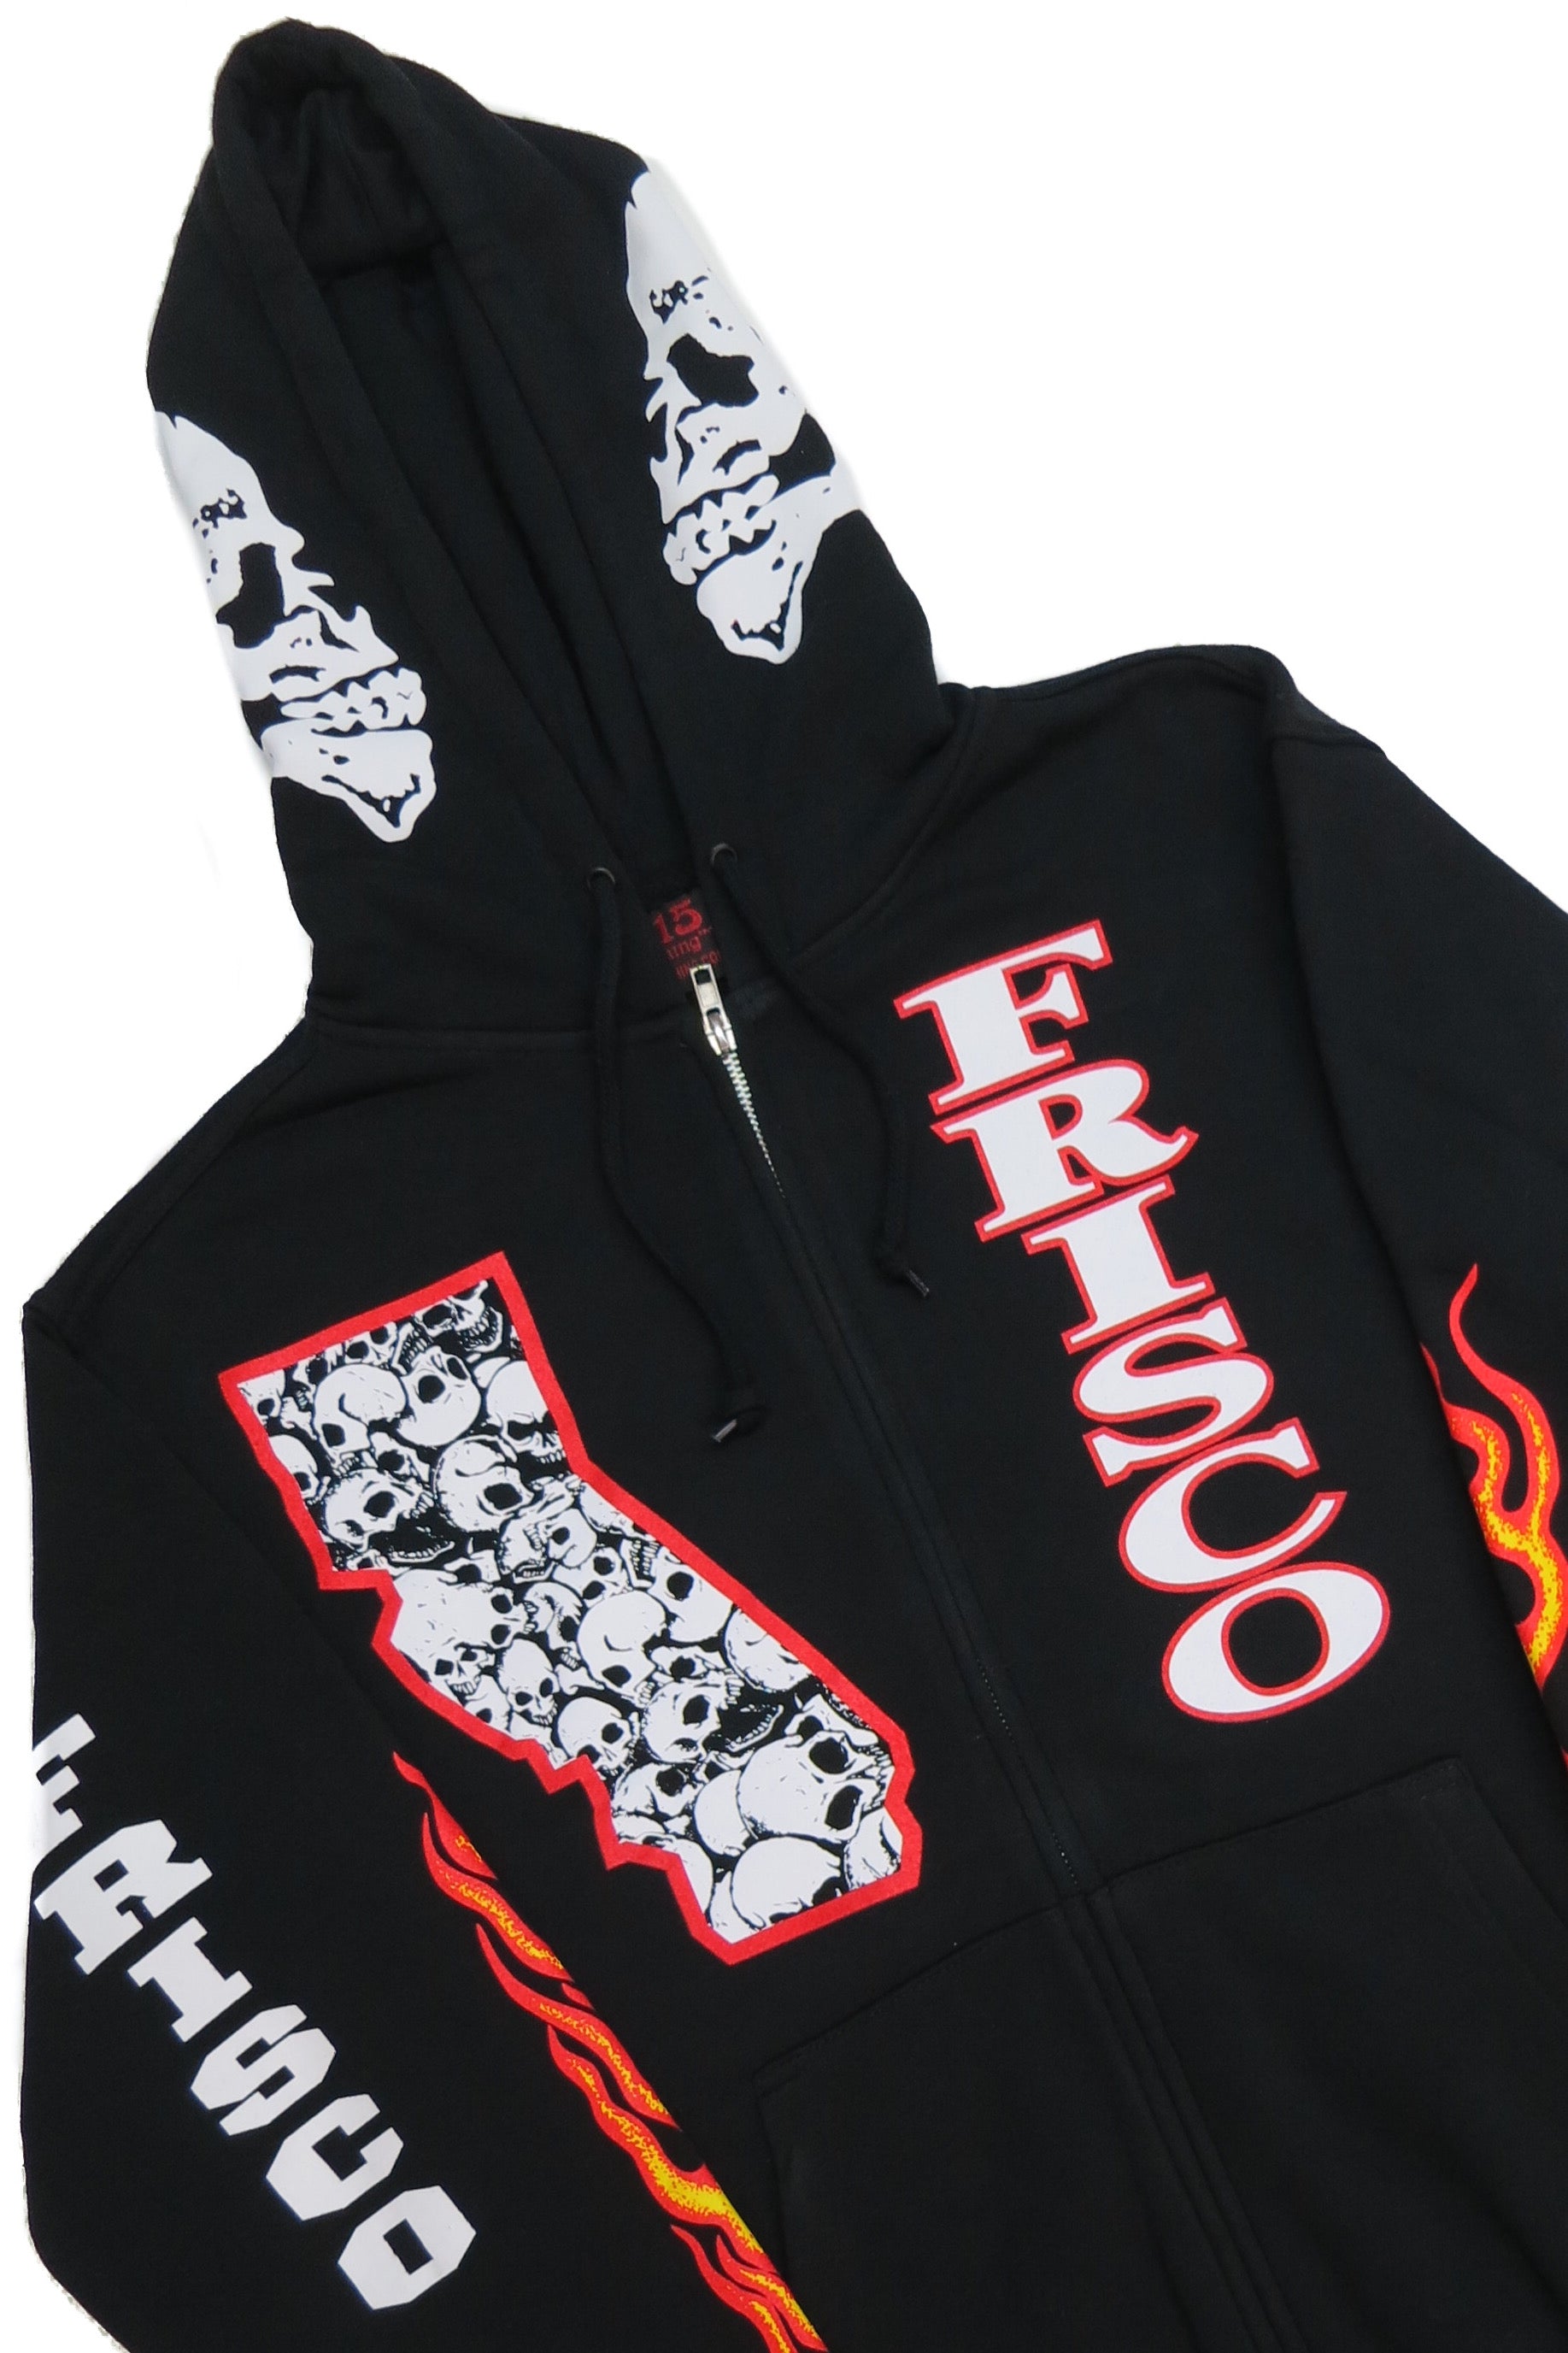 Skulls & Frisco Hooded Zipper Sweatshirt - 415 Clothing,